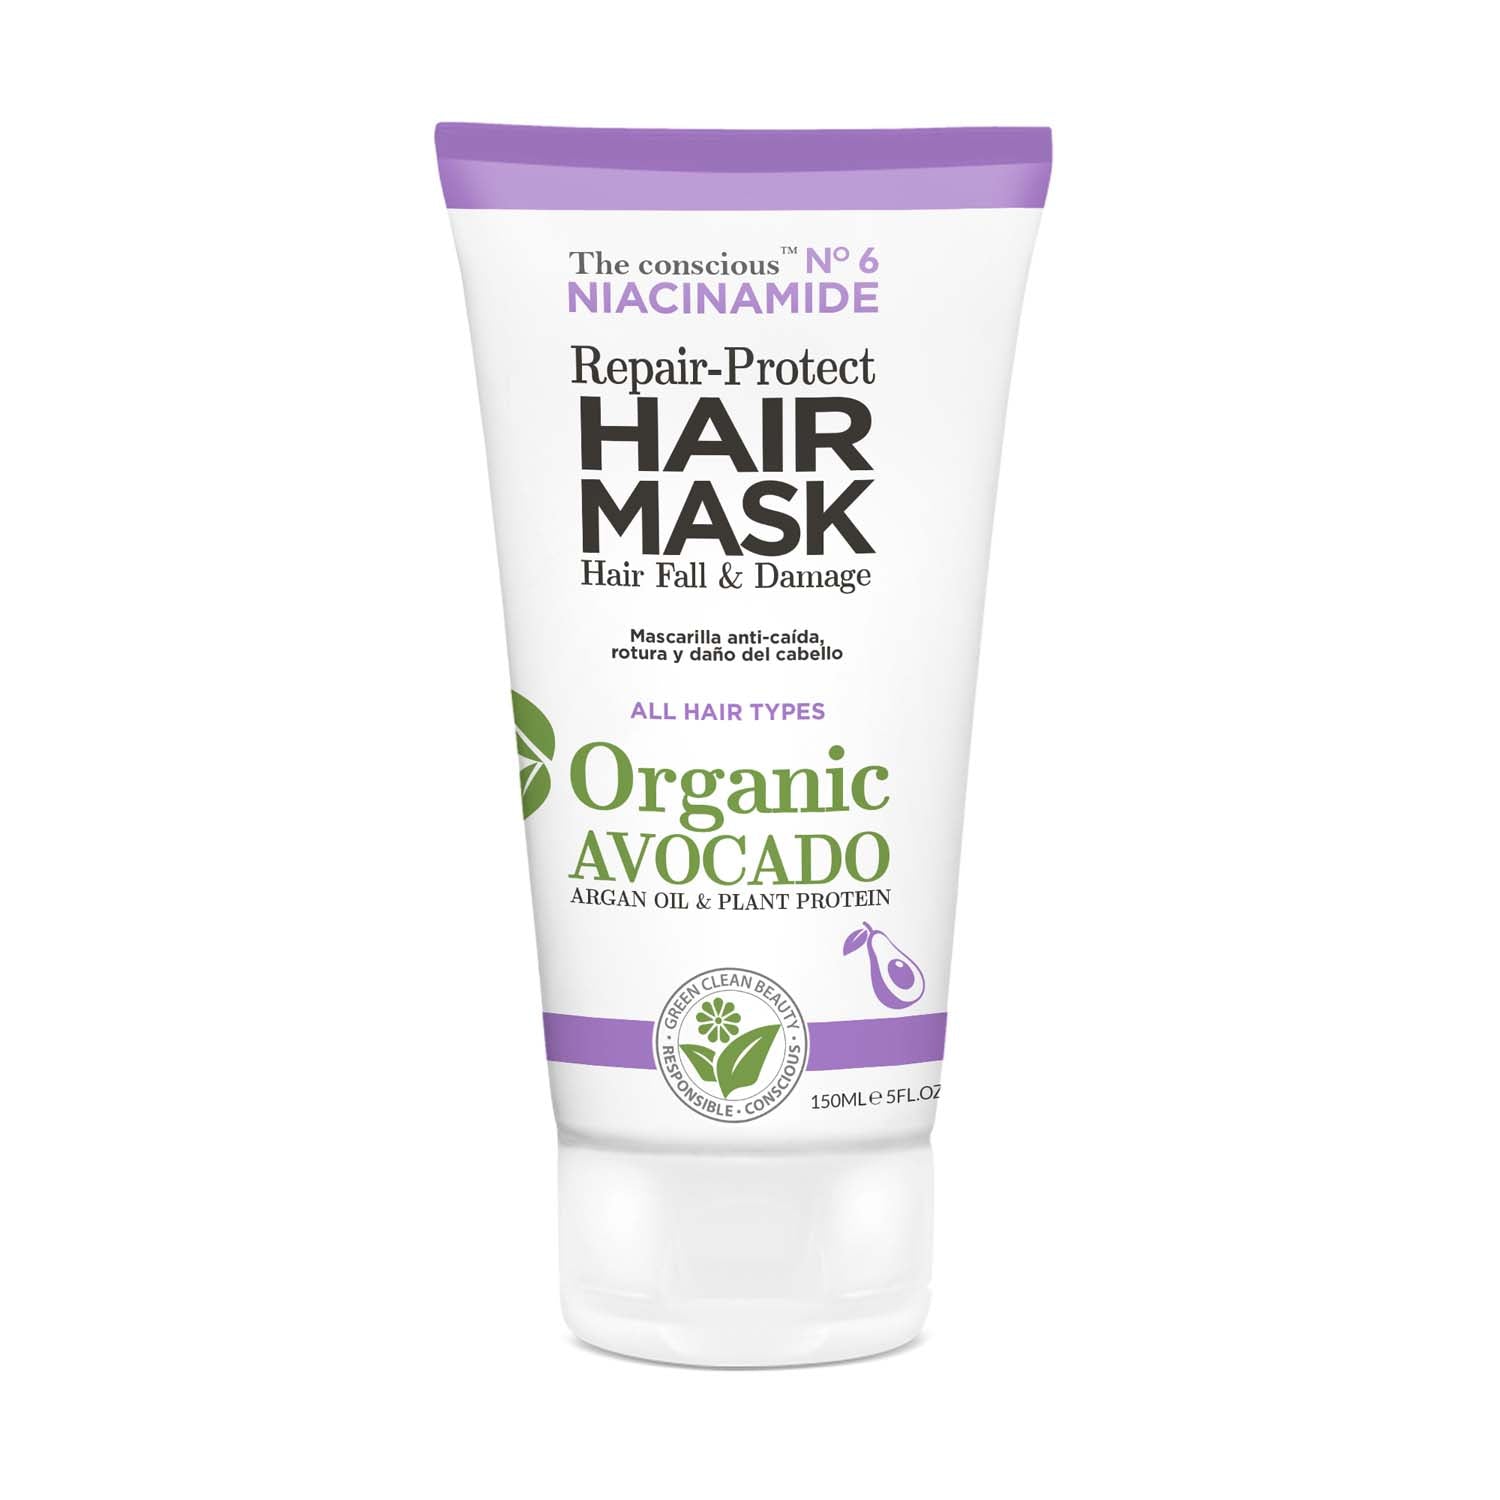 The conscious™ Niacinamide Repair-Protect Hair Mask Damage &amp; Hair Fall Organic Avocado